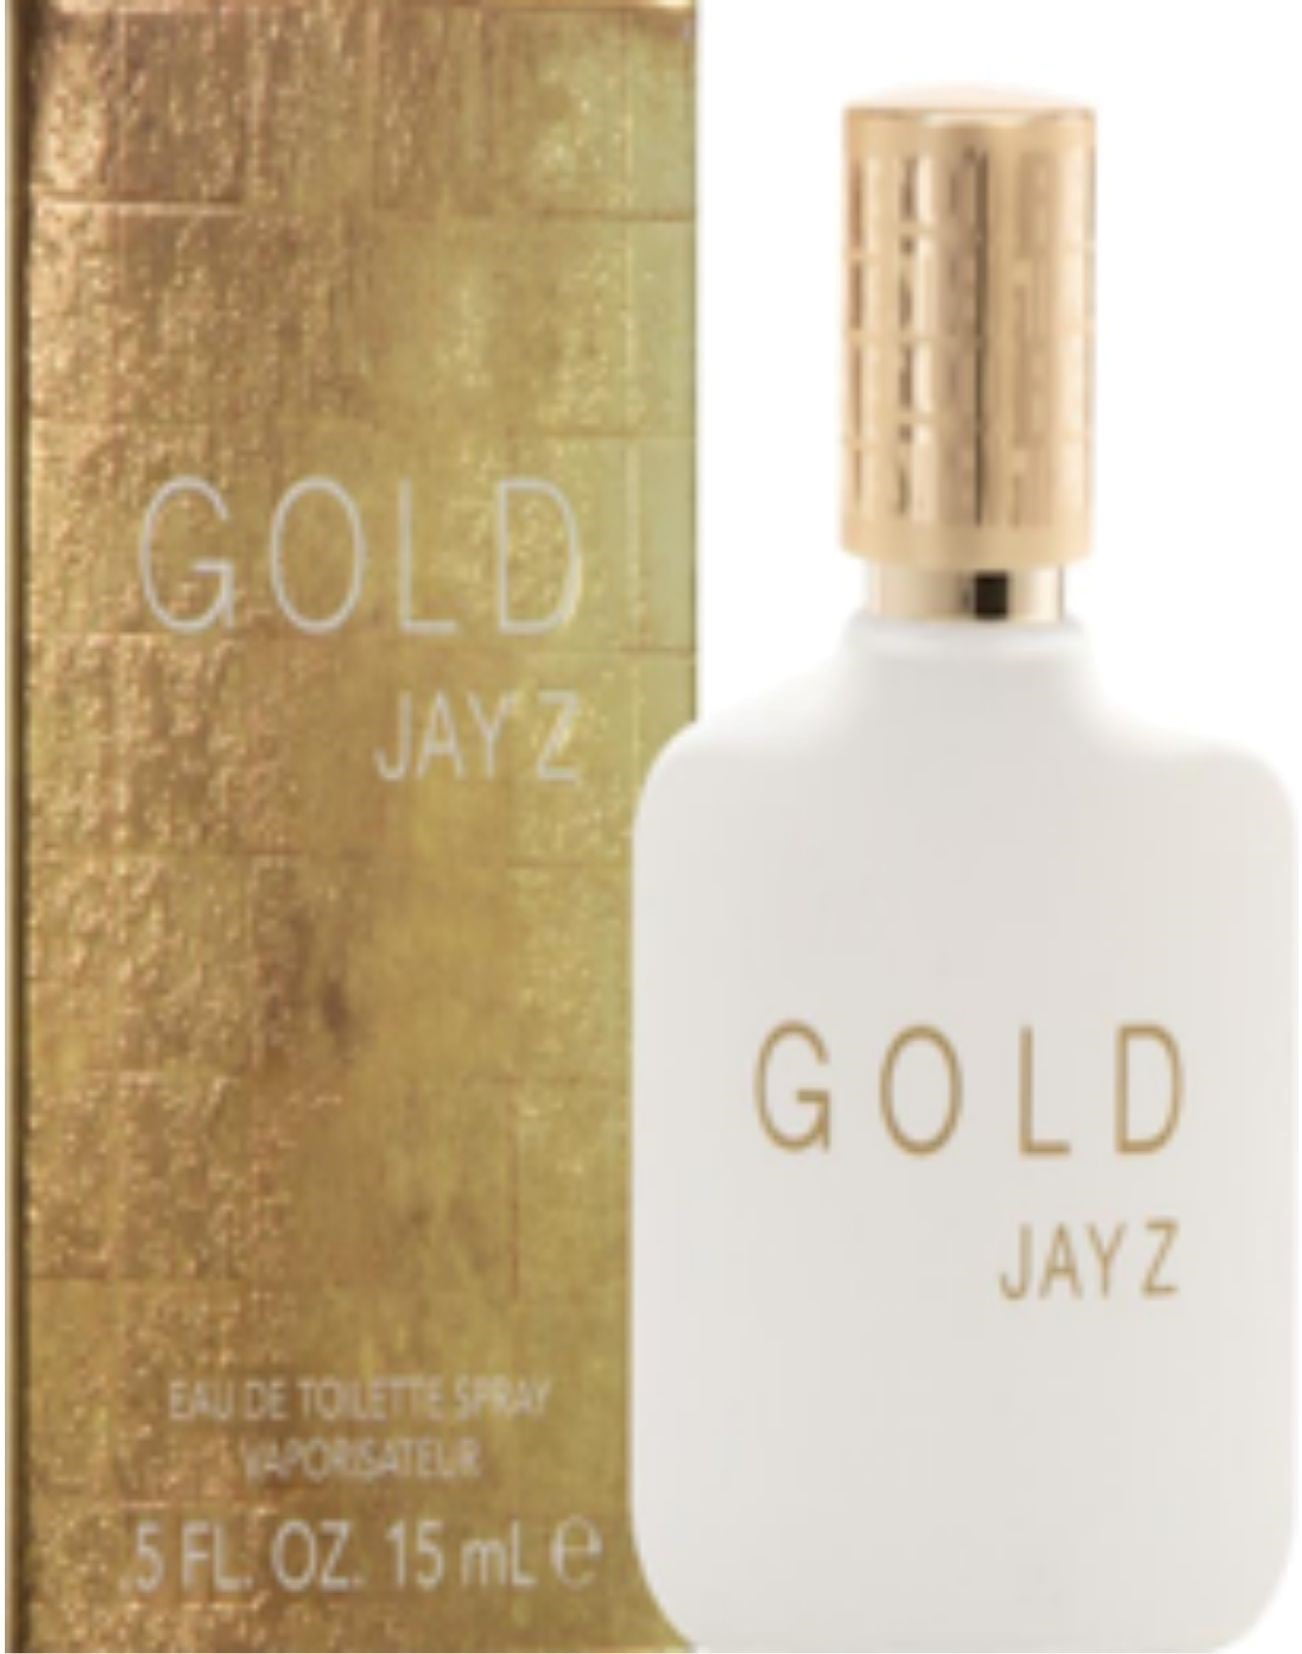 JAY Z JAY Z GOLD EDT SPRAY 0.5 OZ JAY Z GOLD/JAY Z EDT SPRAY 0.5 OZ (15 ML)  (M) - Walmart.com